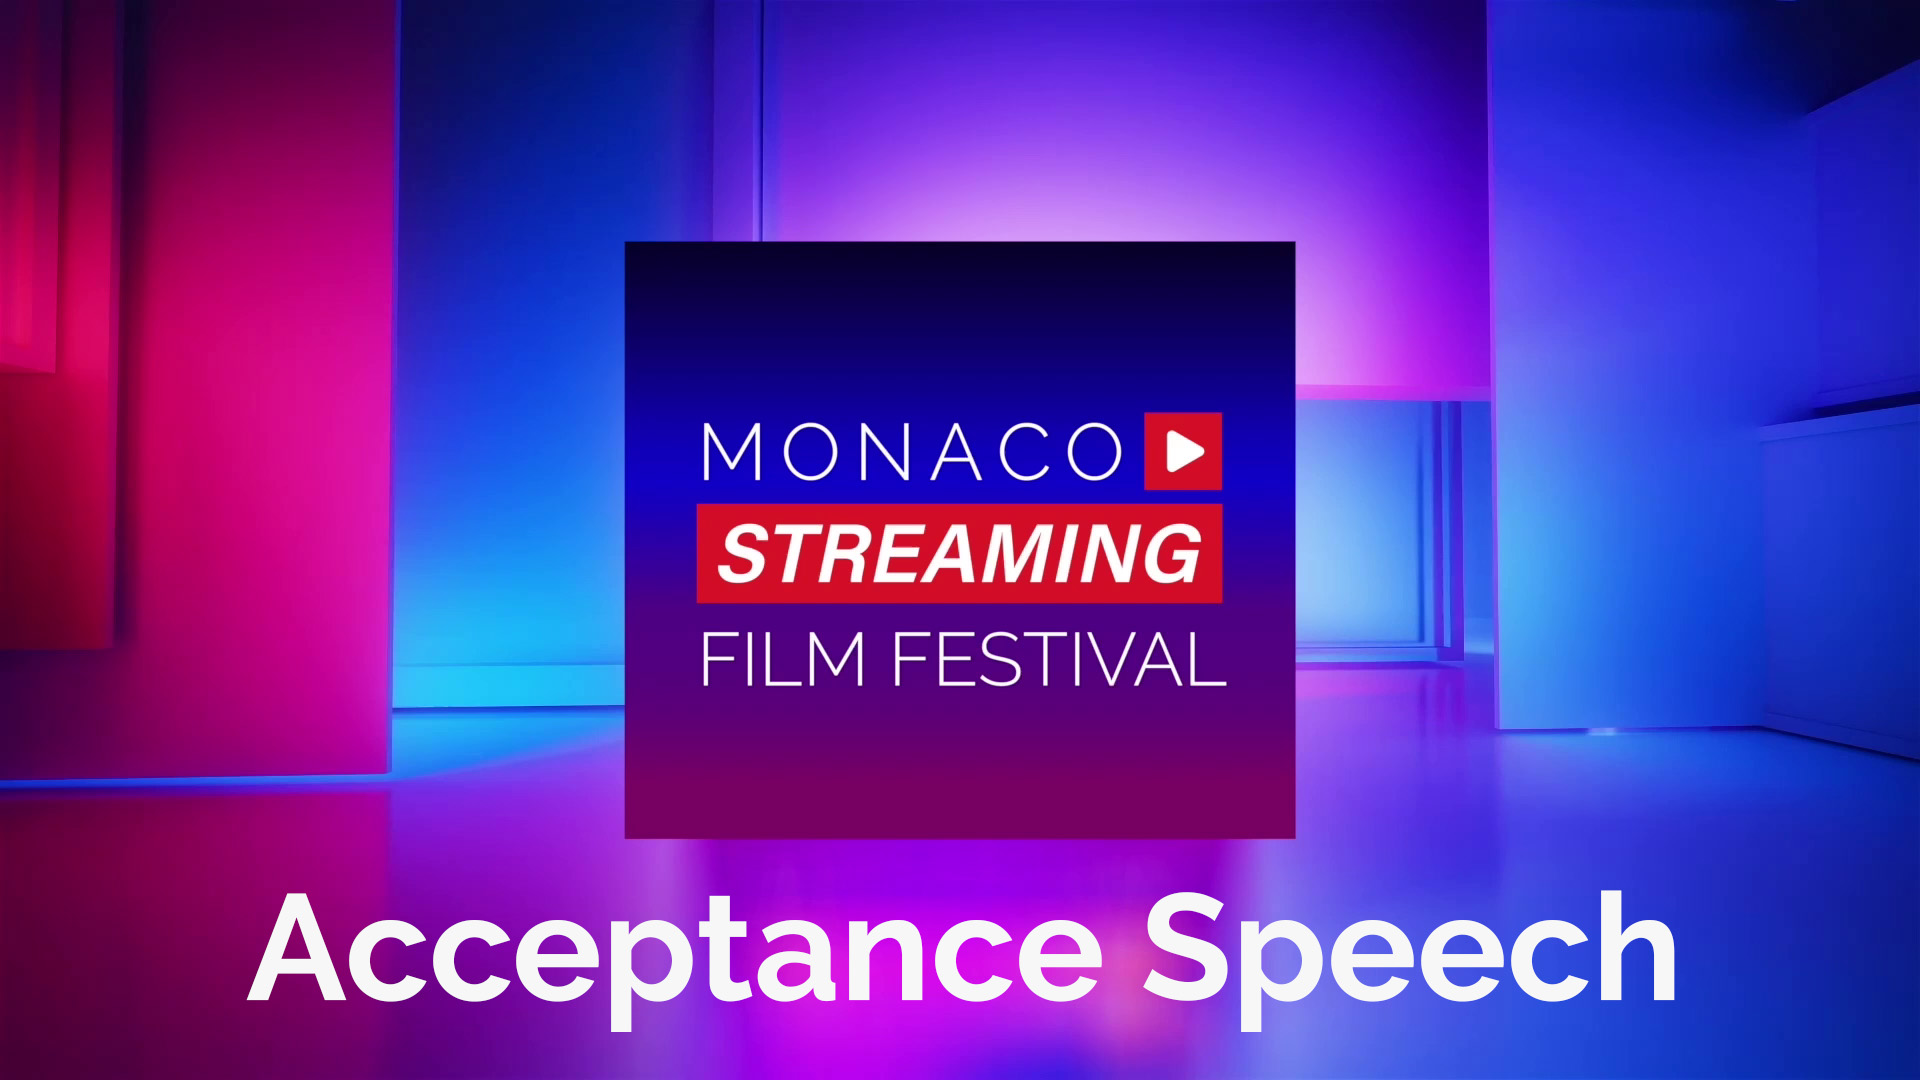 Monaco Streaming Film Festival 2022 Acceptance Speech